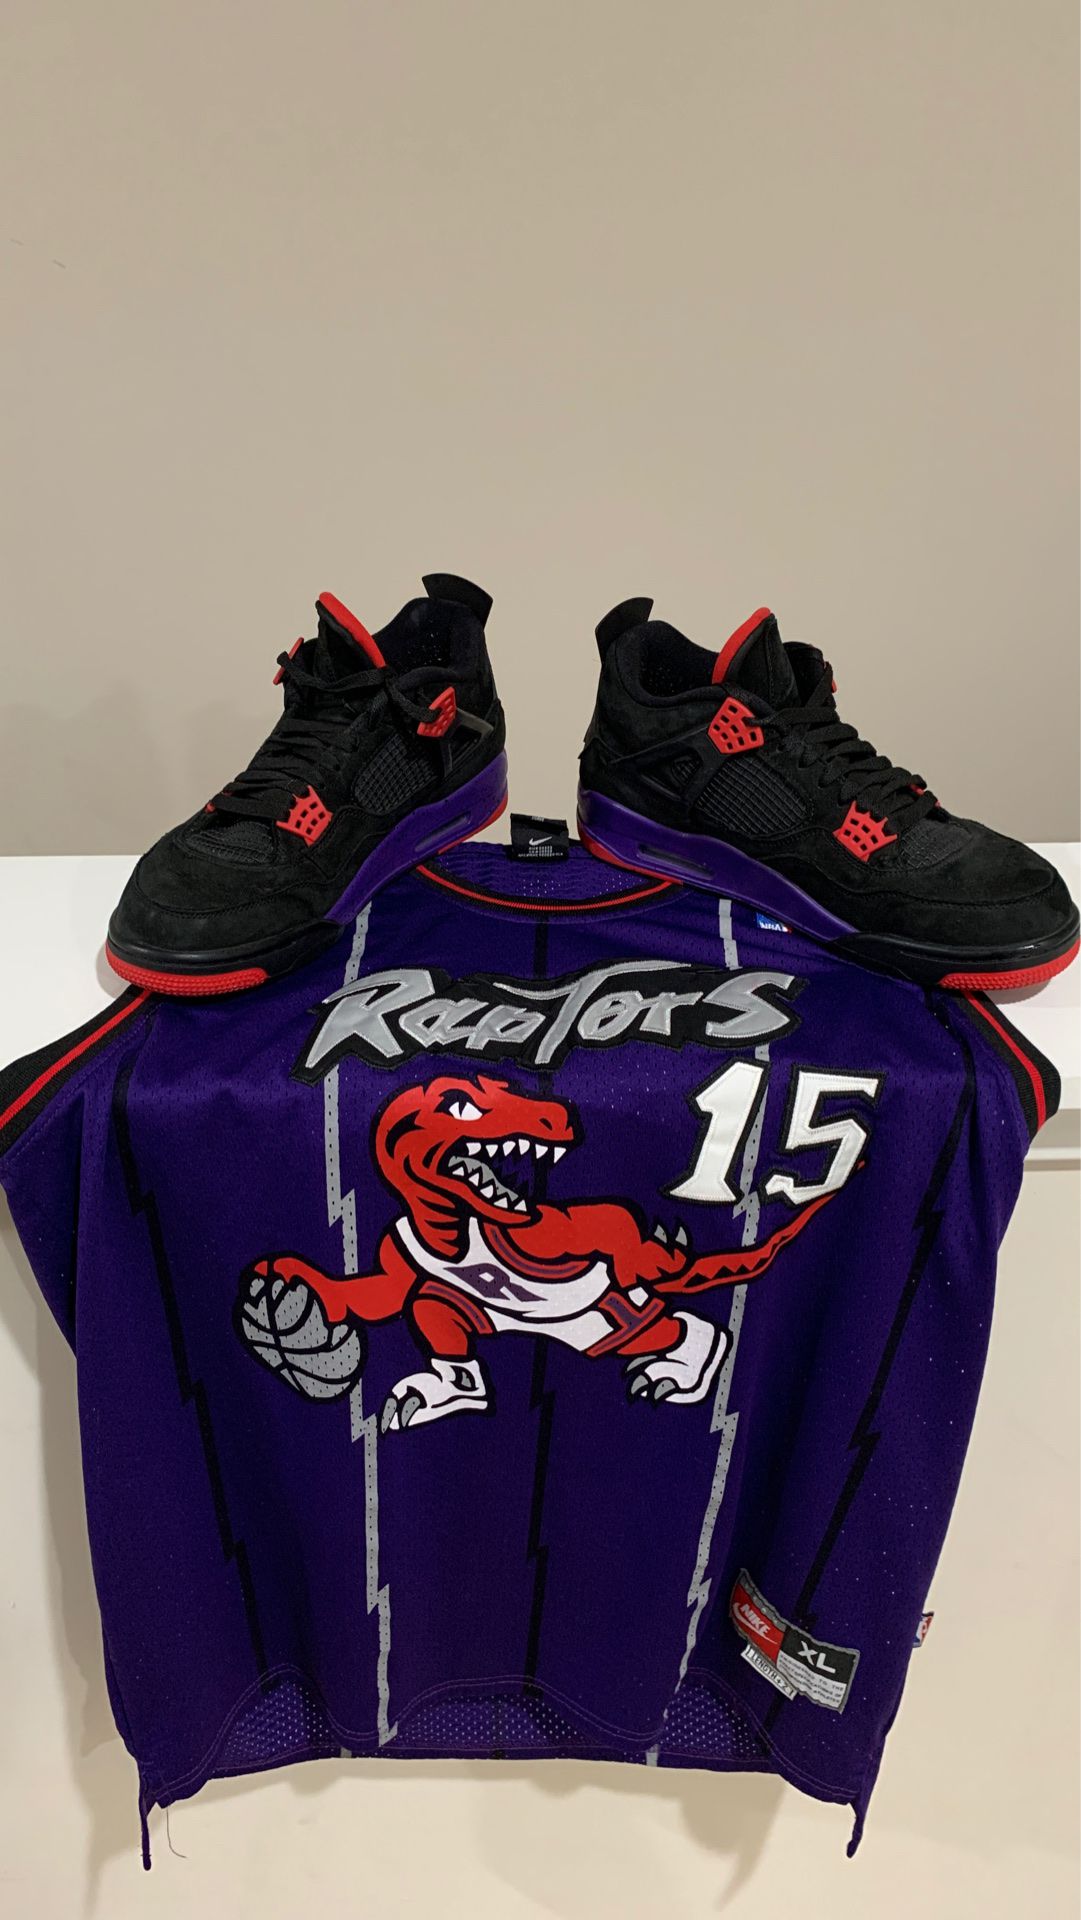 Jordan 4 “Raptor” & Raptors Jersey